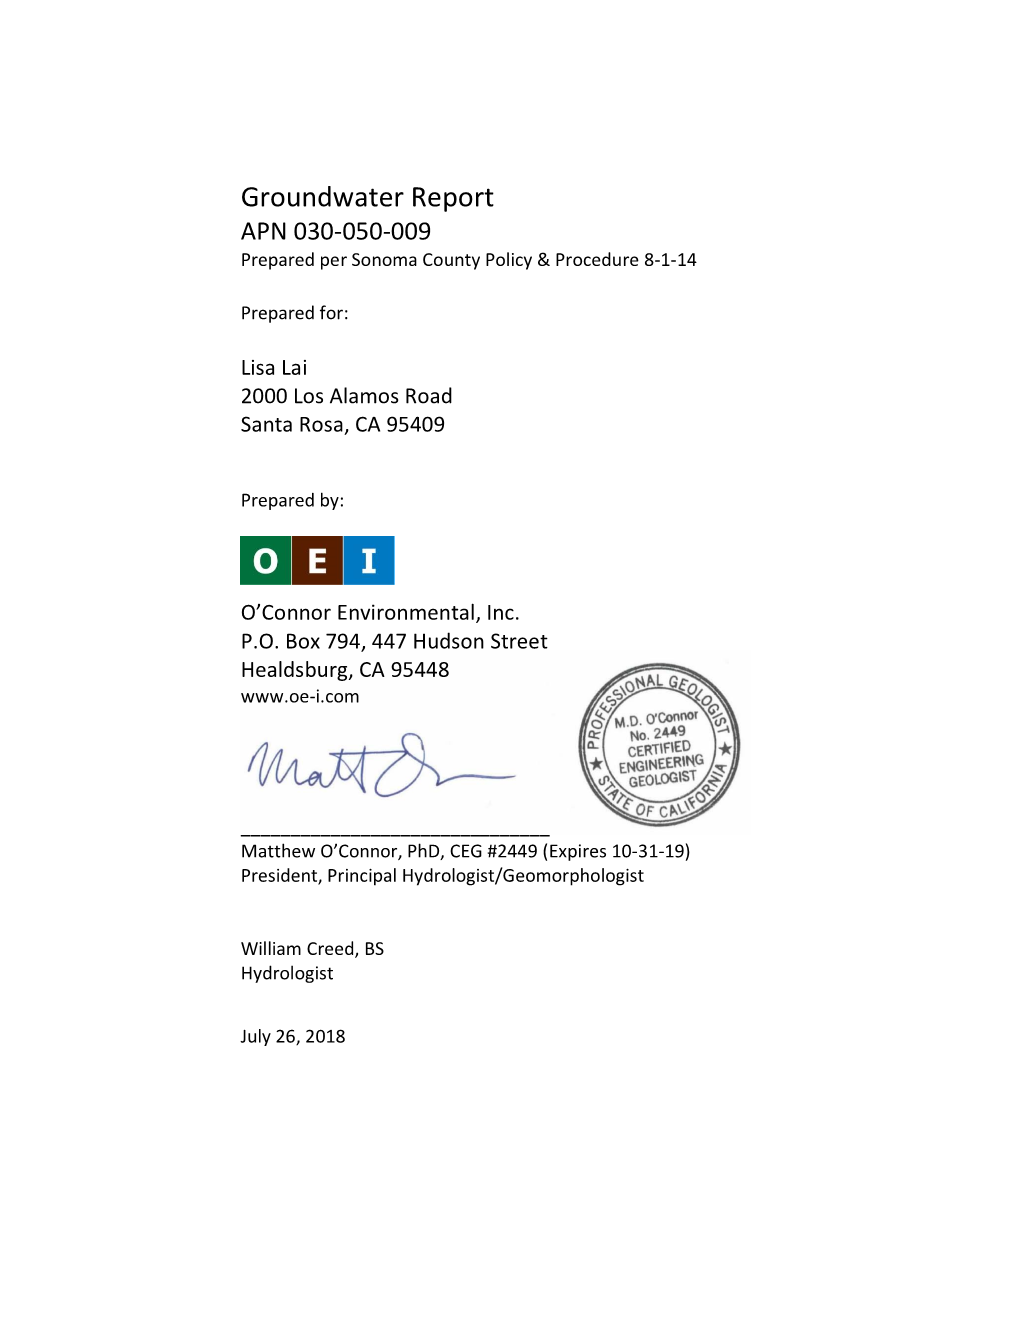 Groundwater Report APN 030-050-009 Prepared Per Sonoma County Policy & Procedure 8-1-14